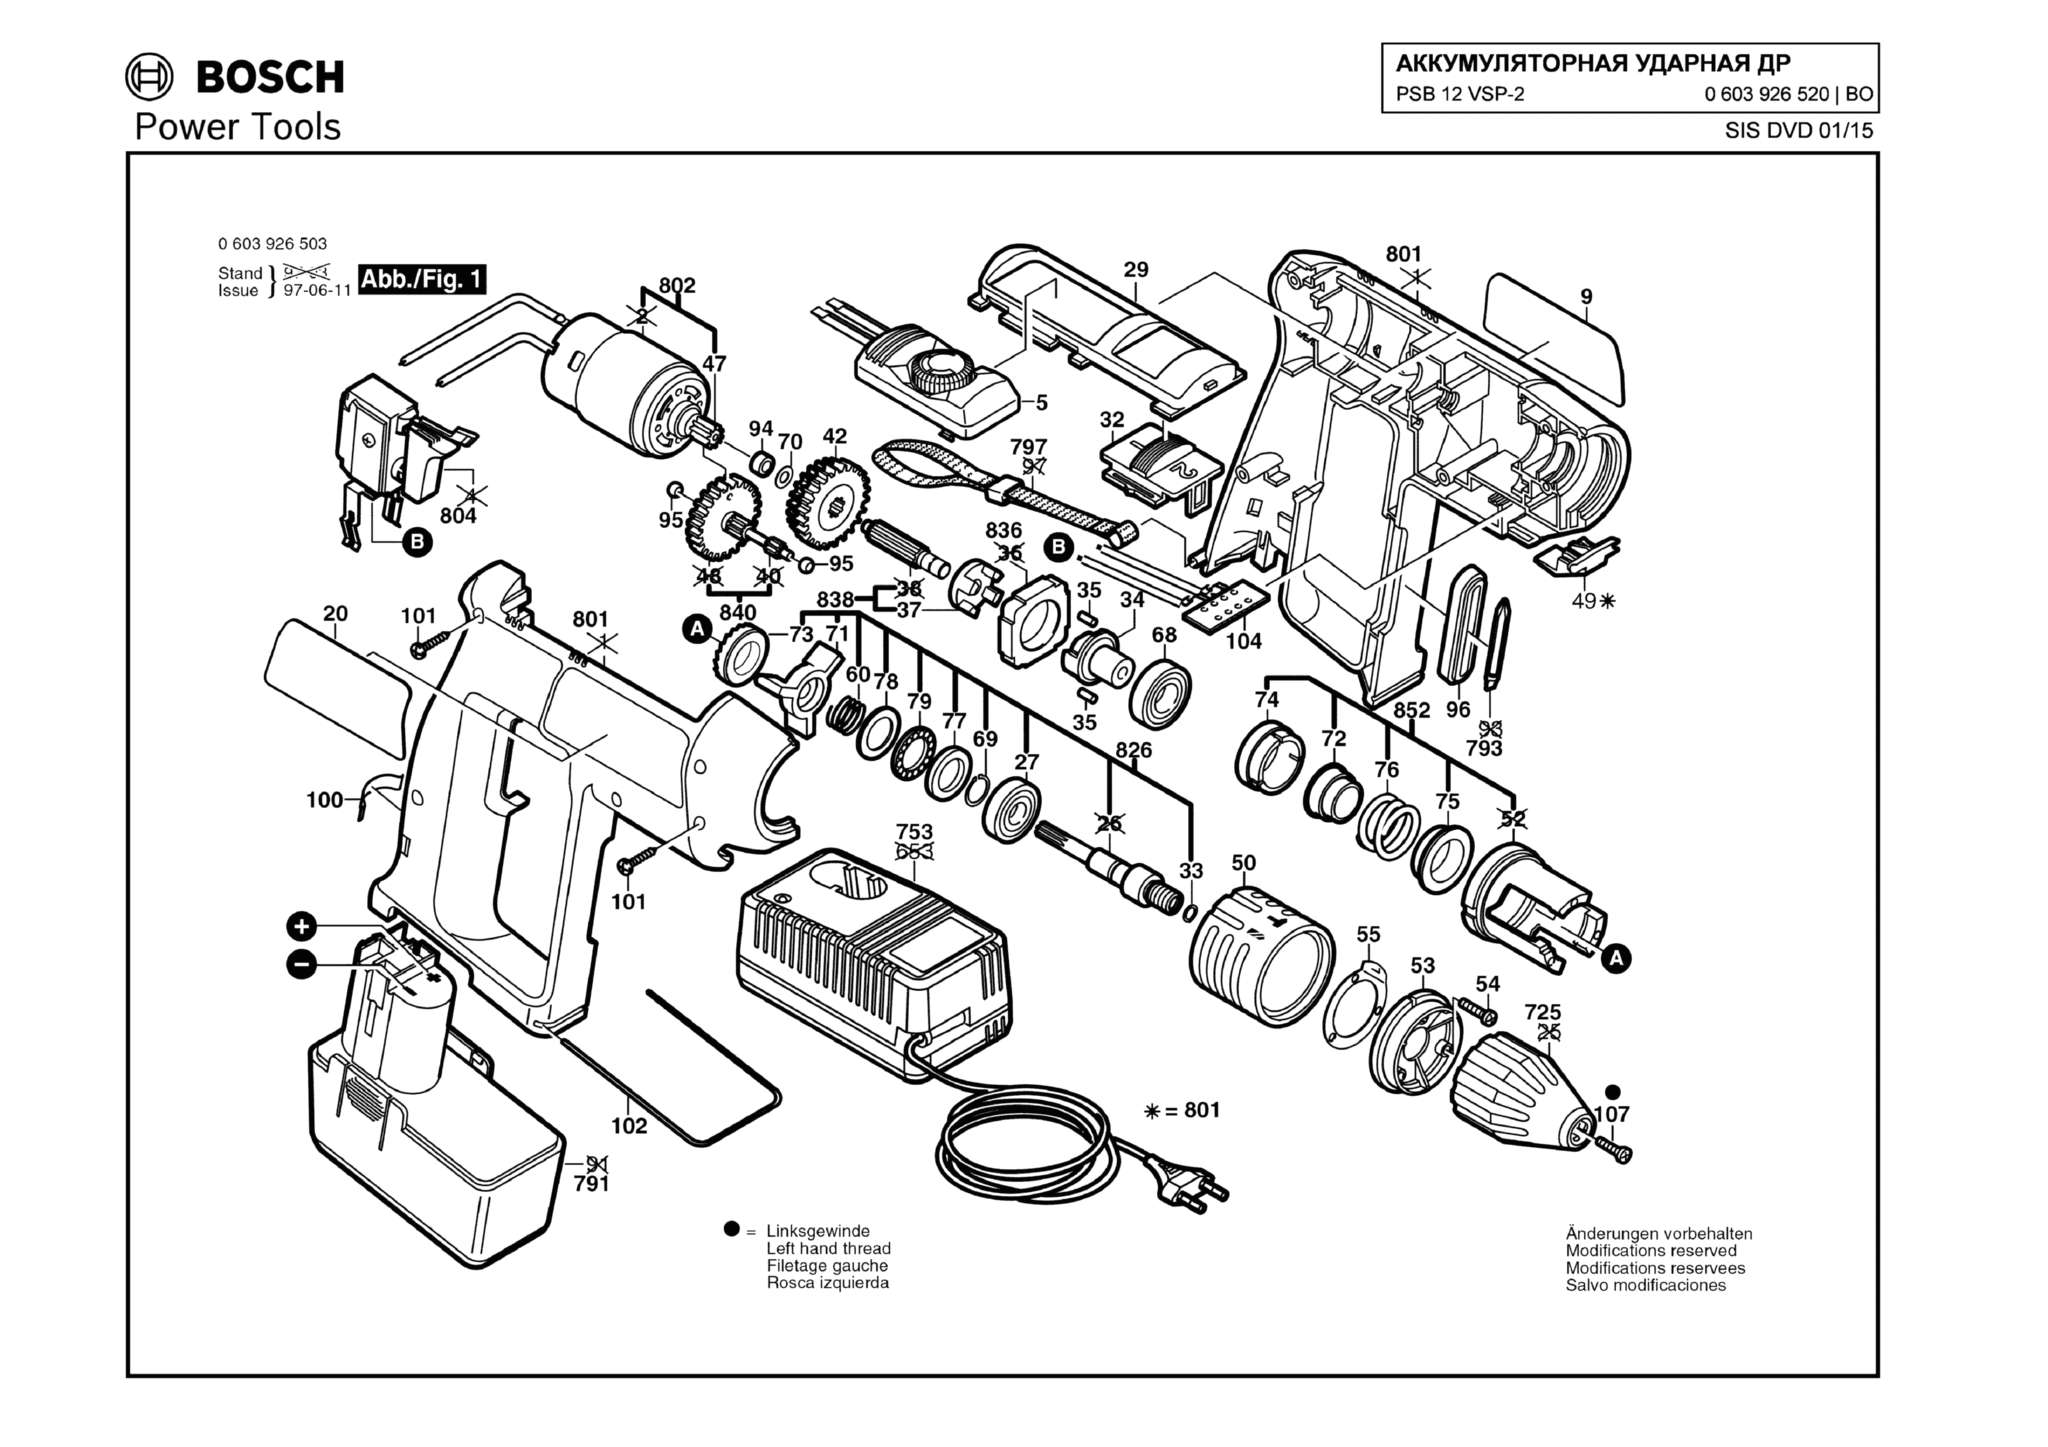 Запчасти, схема и деталировка Bosch PSB 12 VSP-2 (ТИП 0603926520)